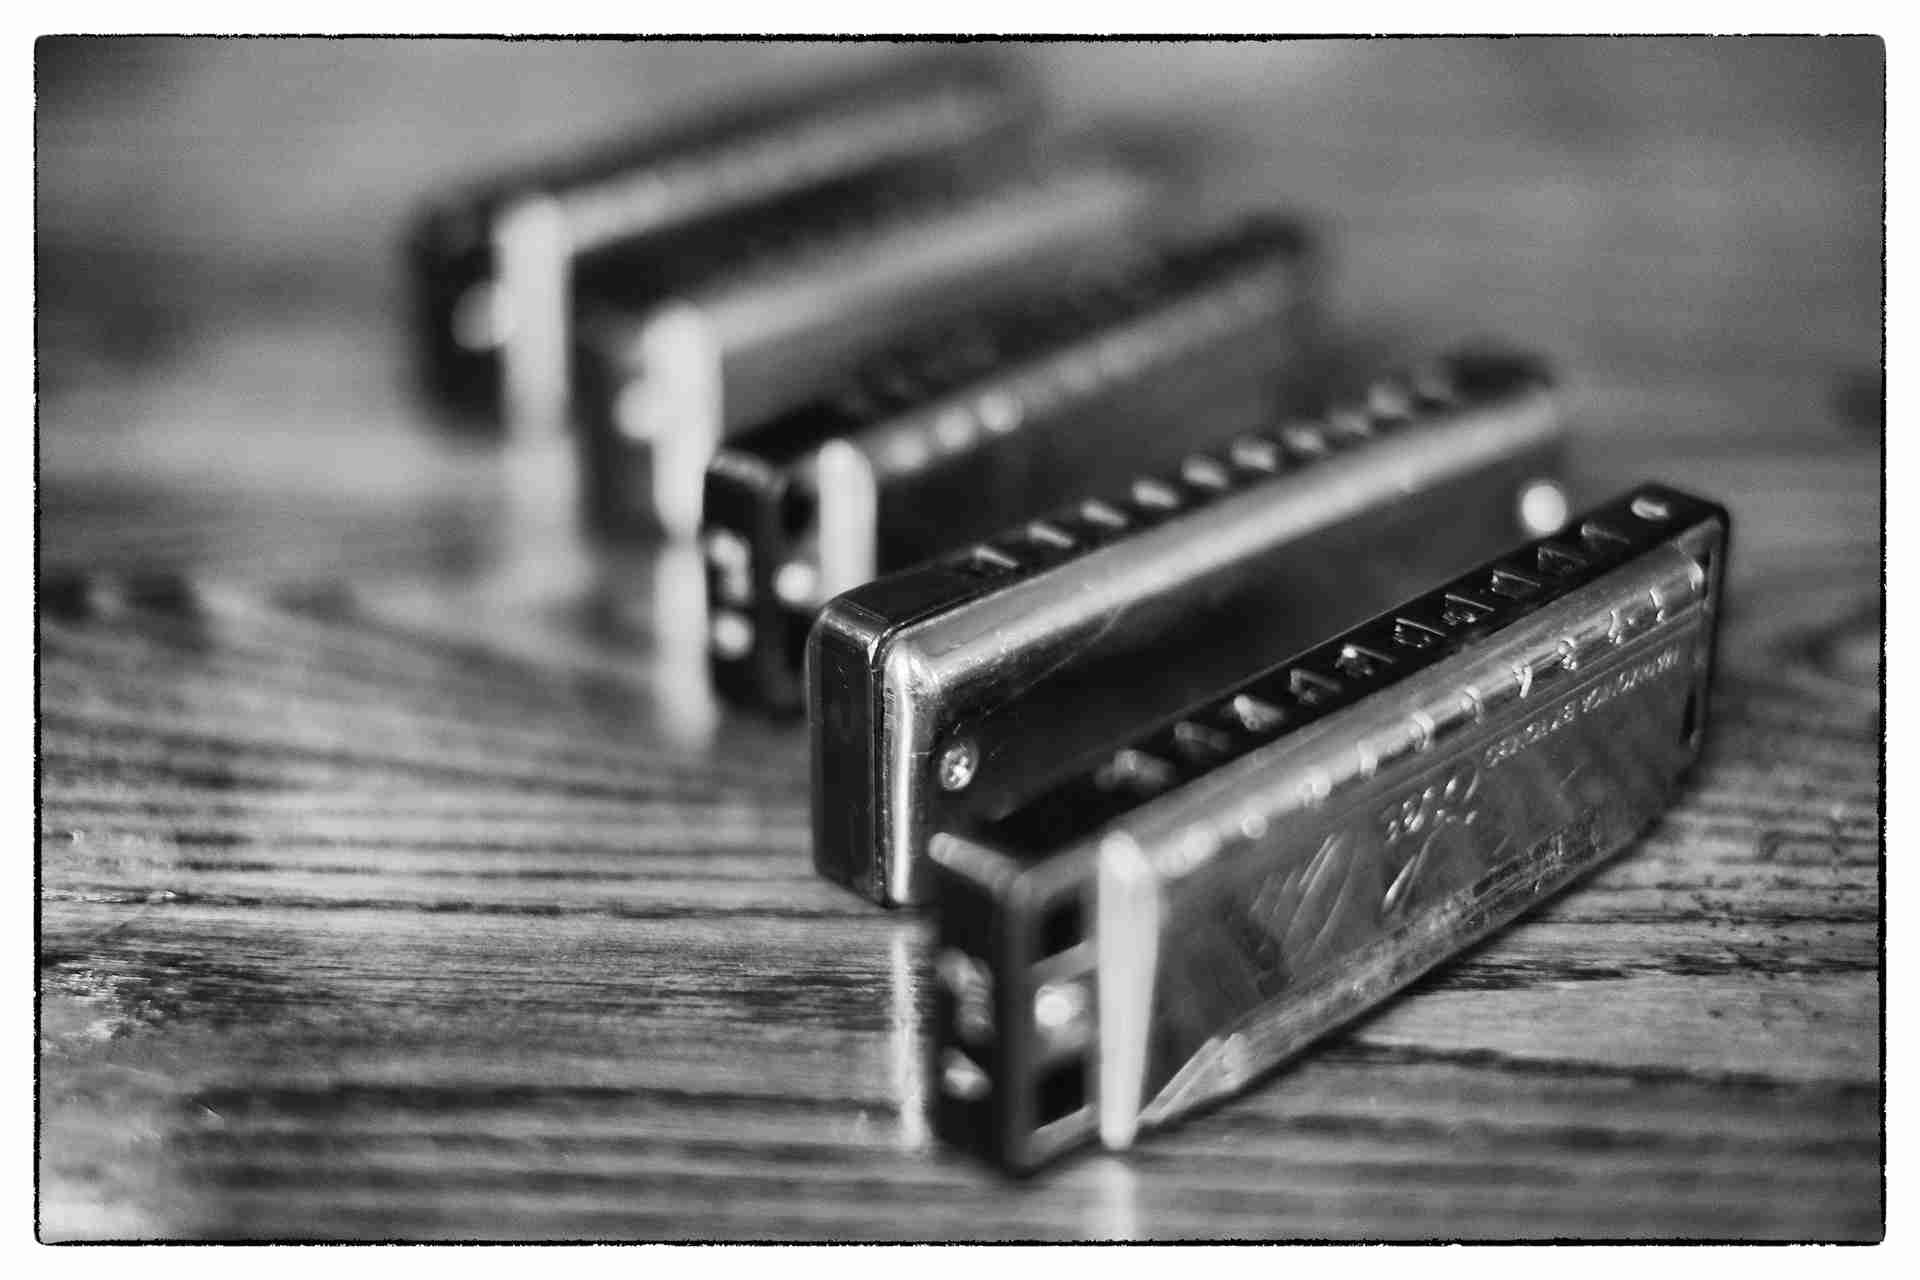 3 harmonicas, black and white photo